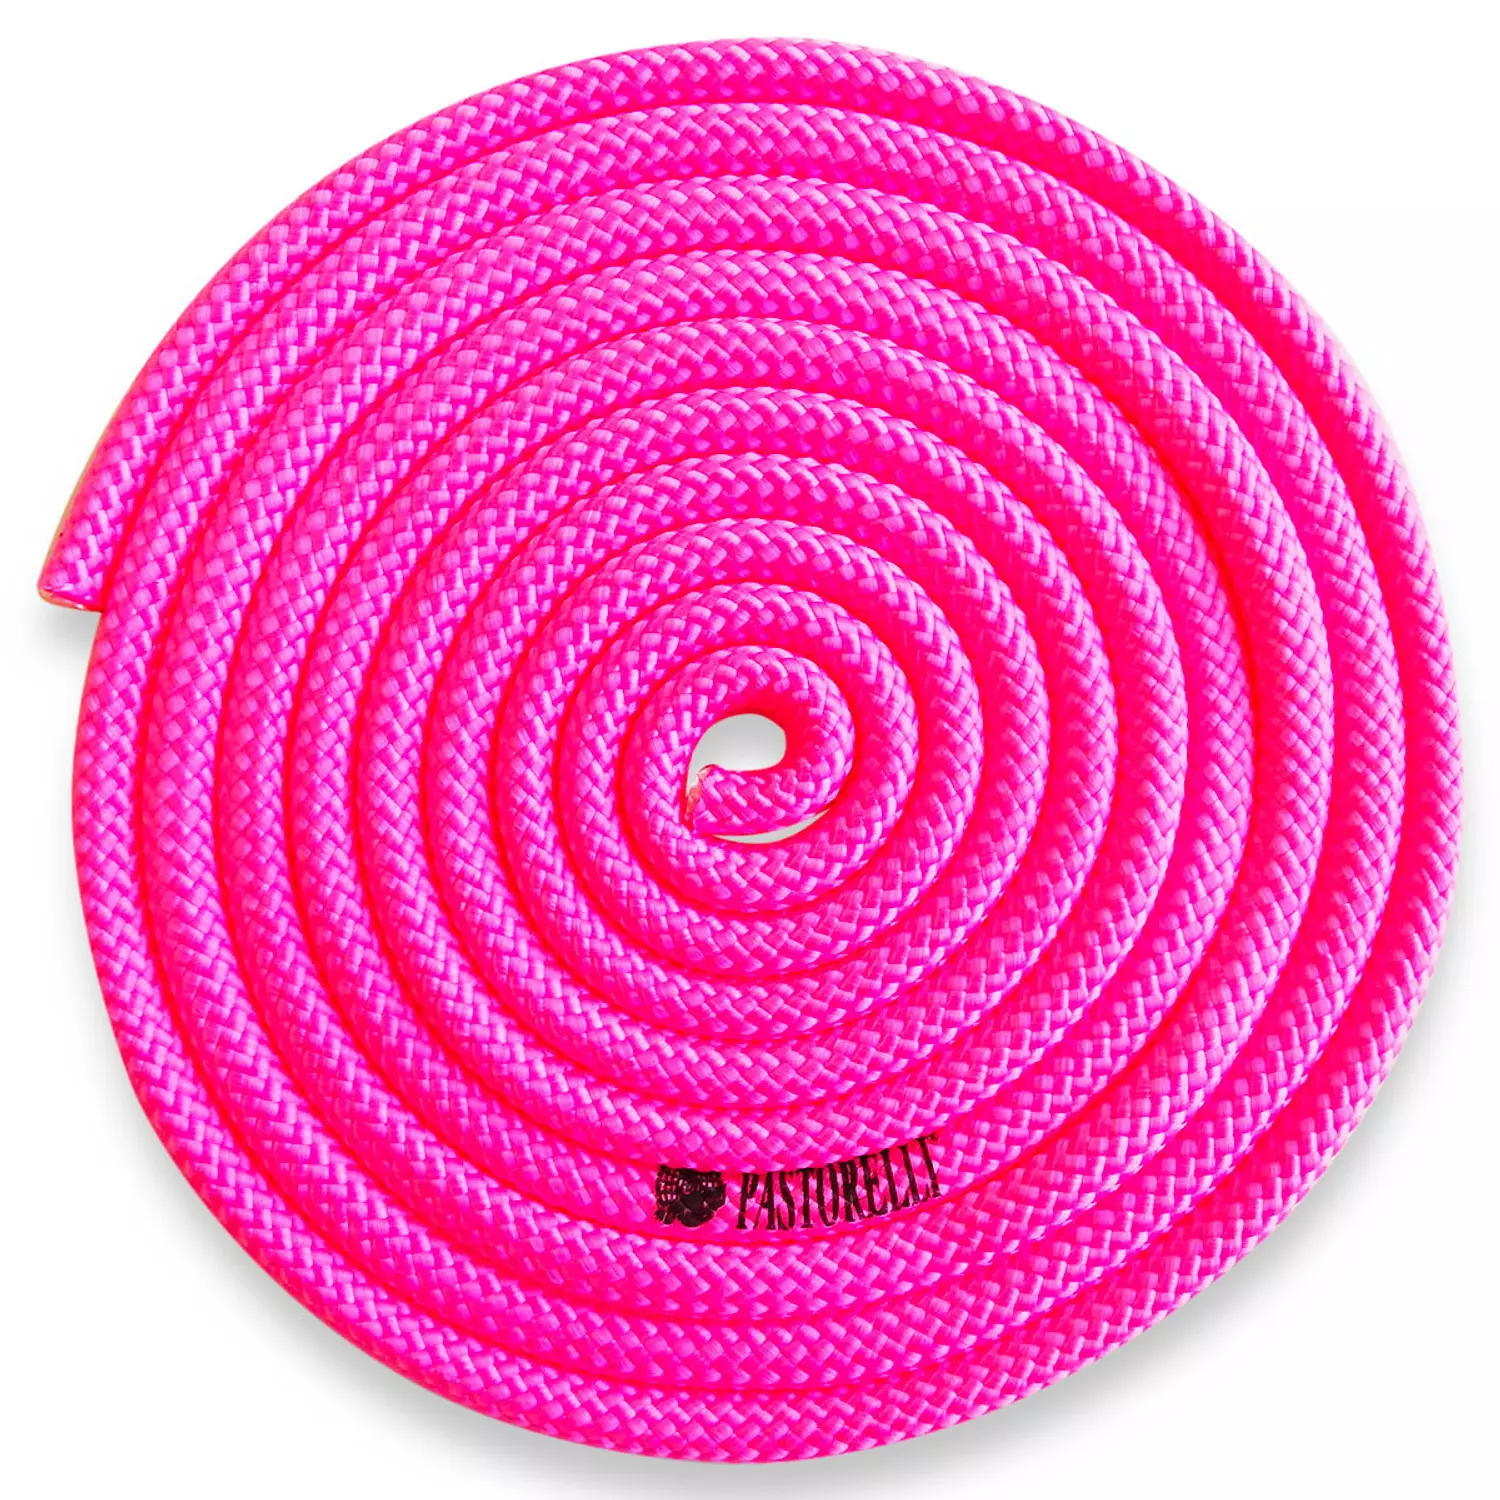 Pastorelli-New Orleans monochromatic rope FIG | 3m 3